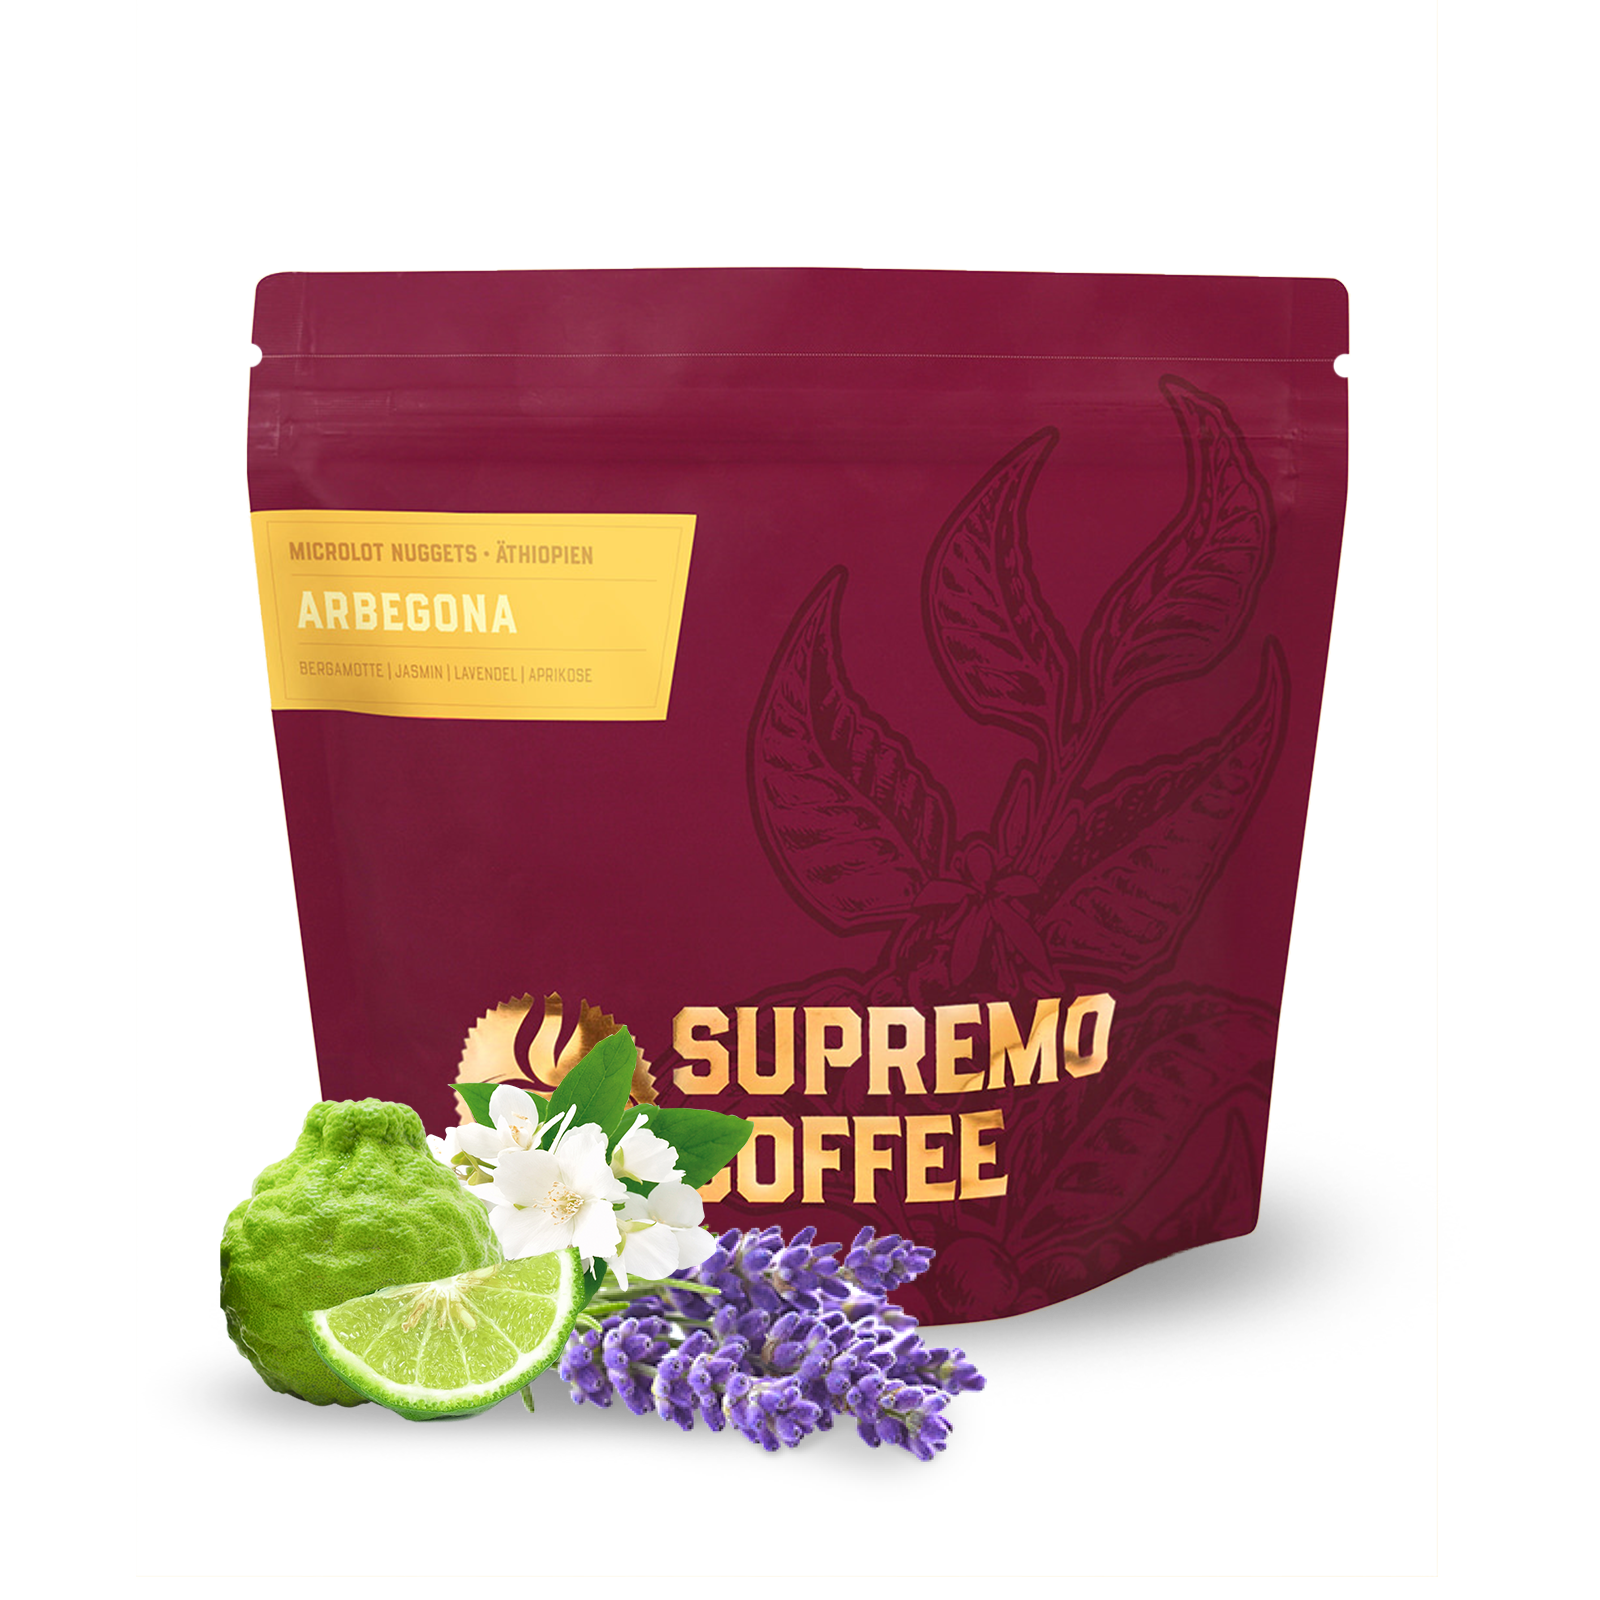 Výběrová káva Supremo Etiopie ARBEGONA - #2 místo Cup Of Excelence